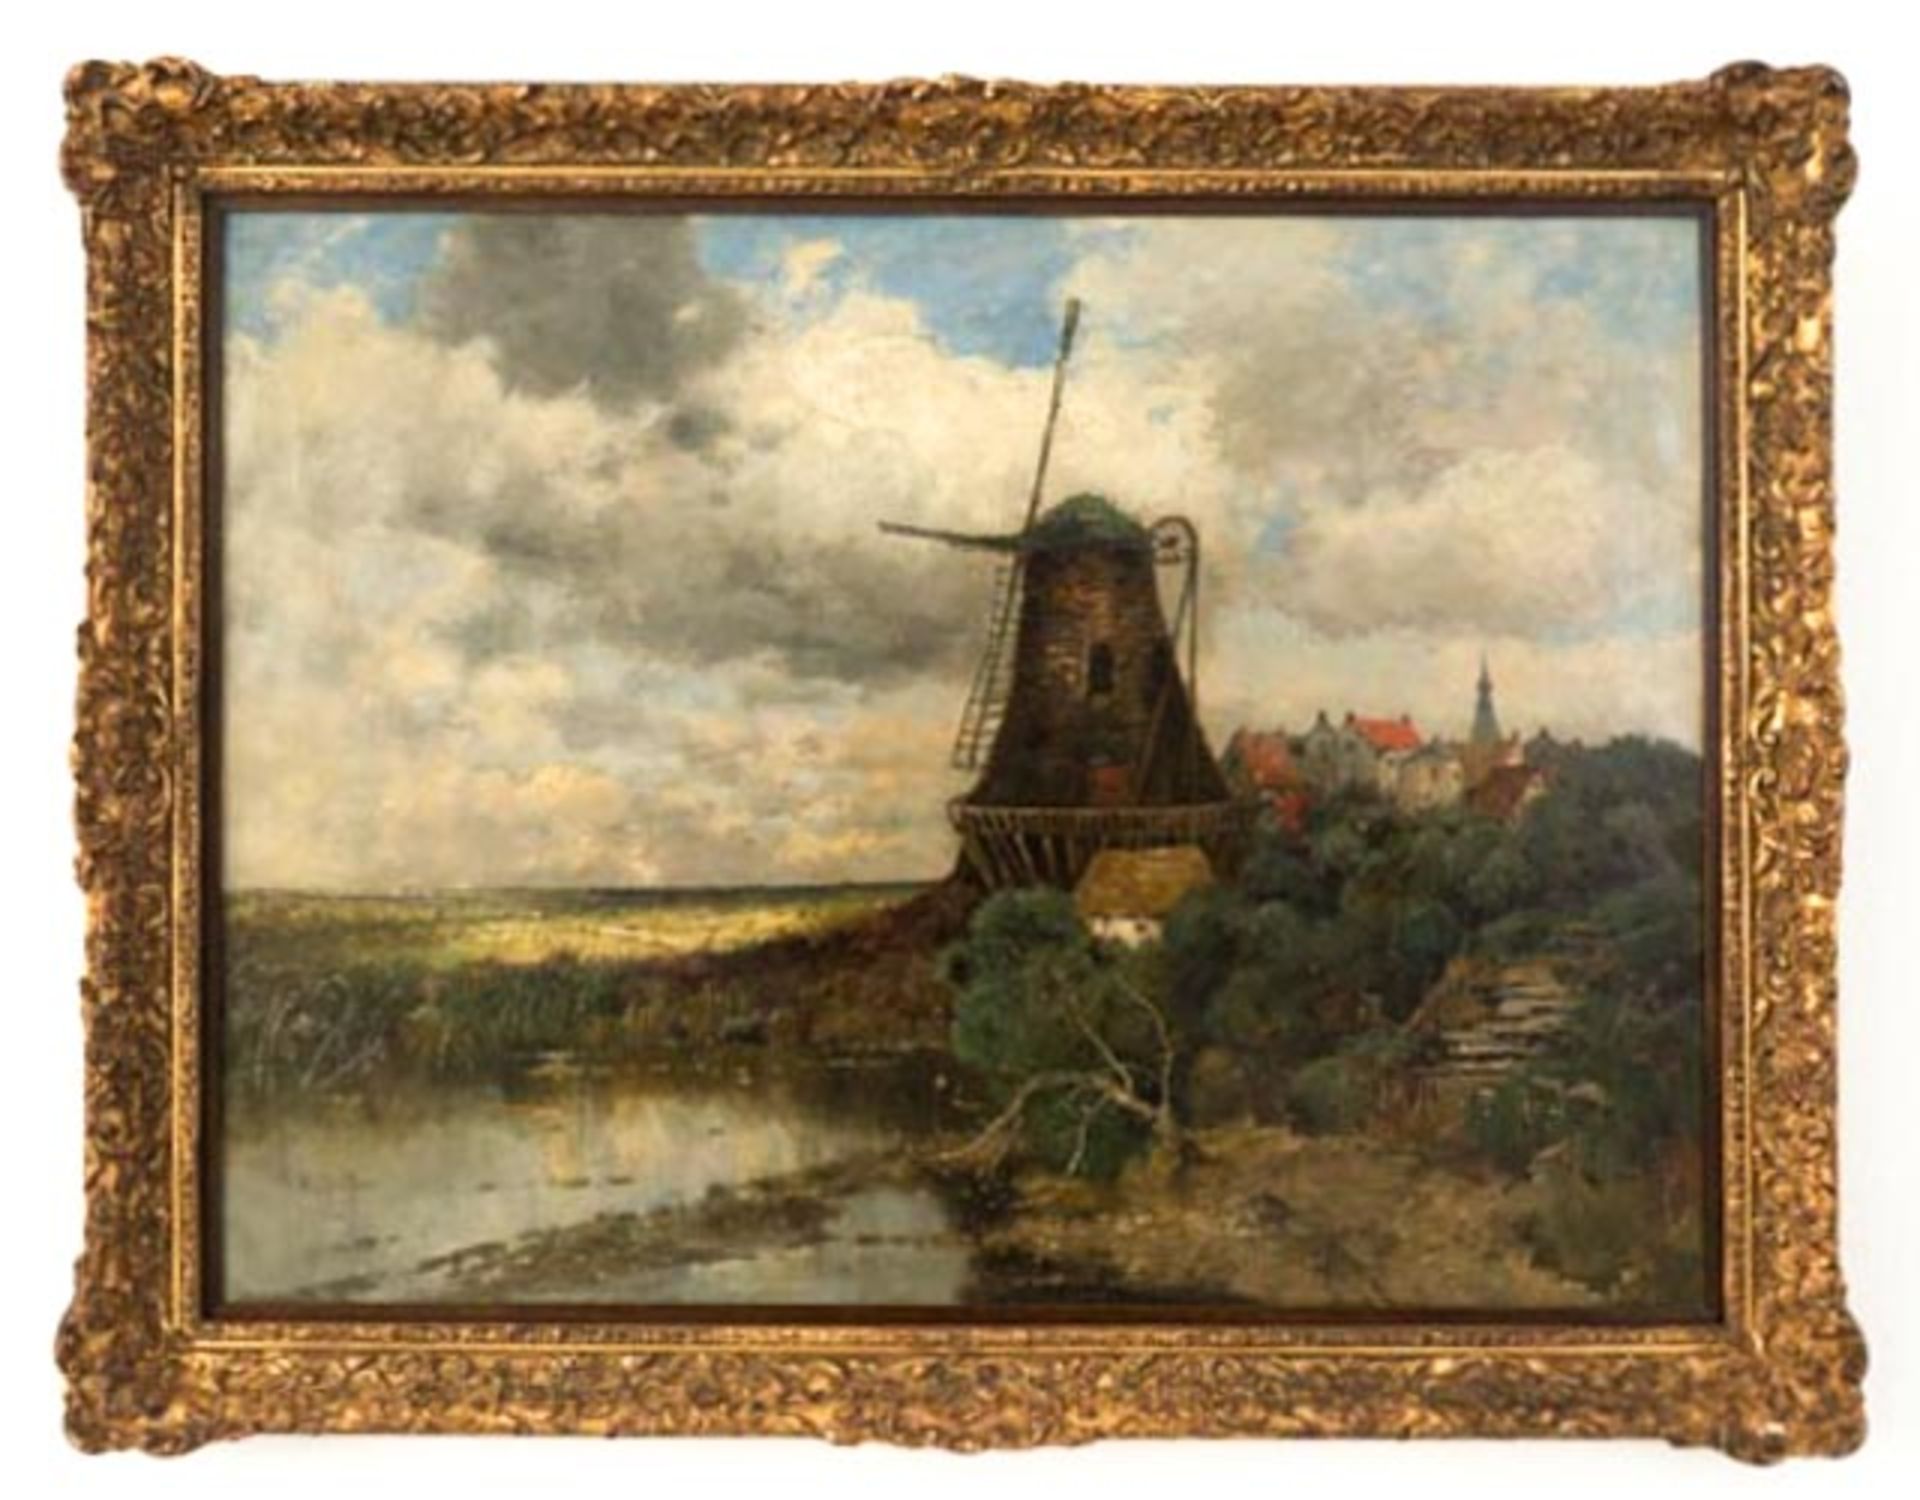 Gemälde "Mühle in Landschaft"